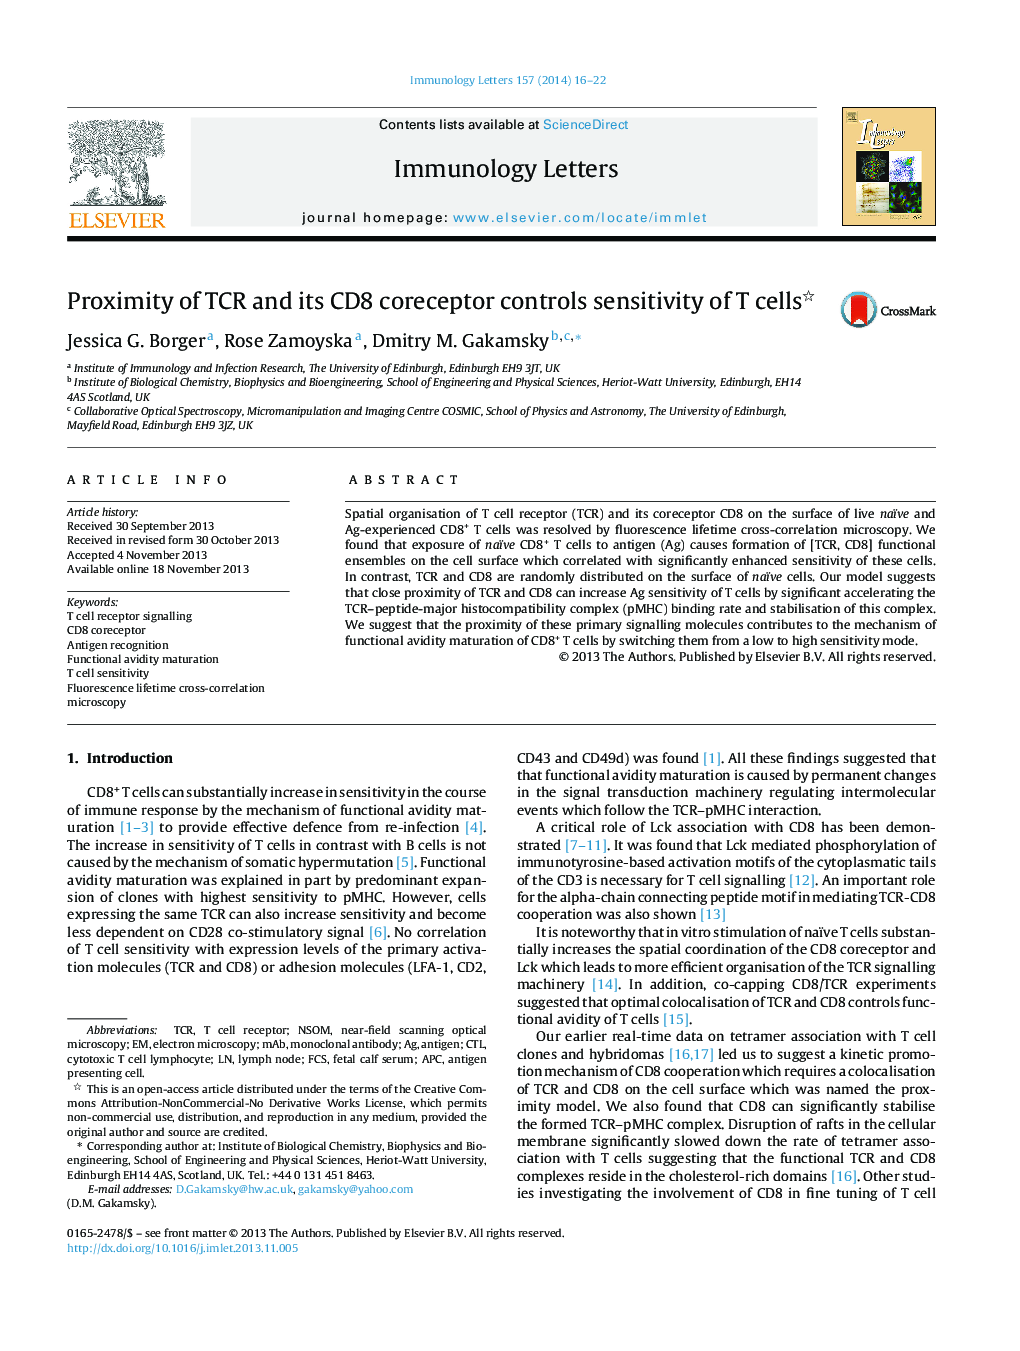 Proximity of TCR and its CD8 coreceptor controls sensitivity of T cells